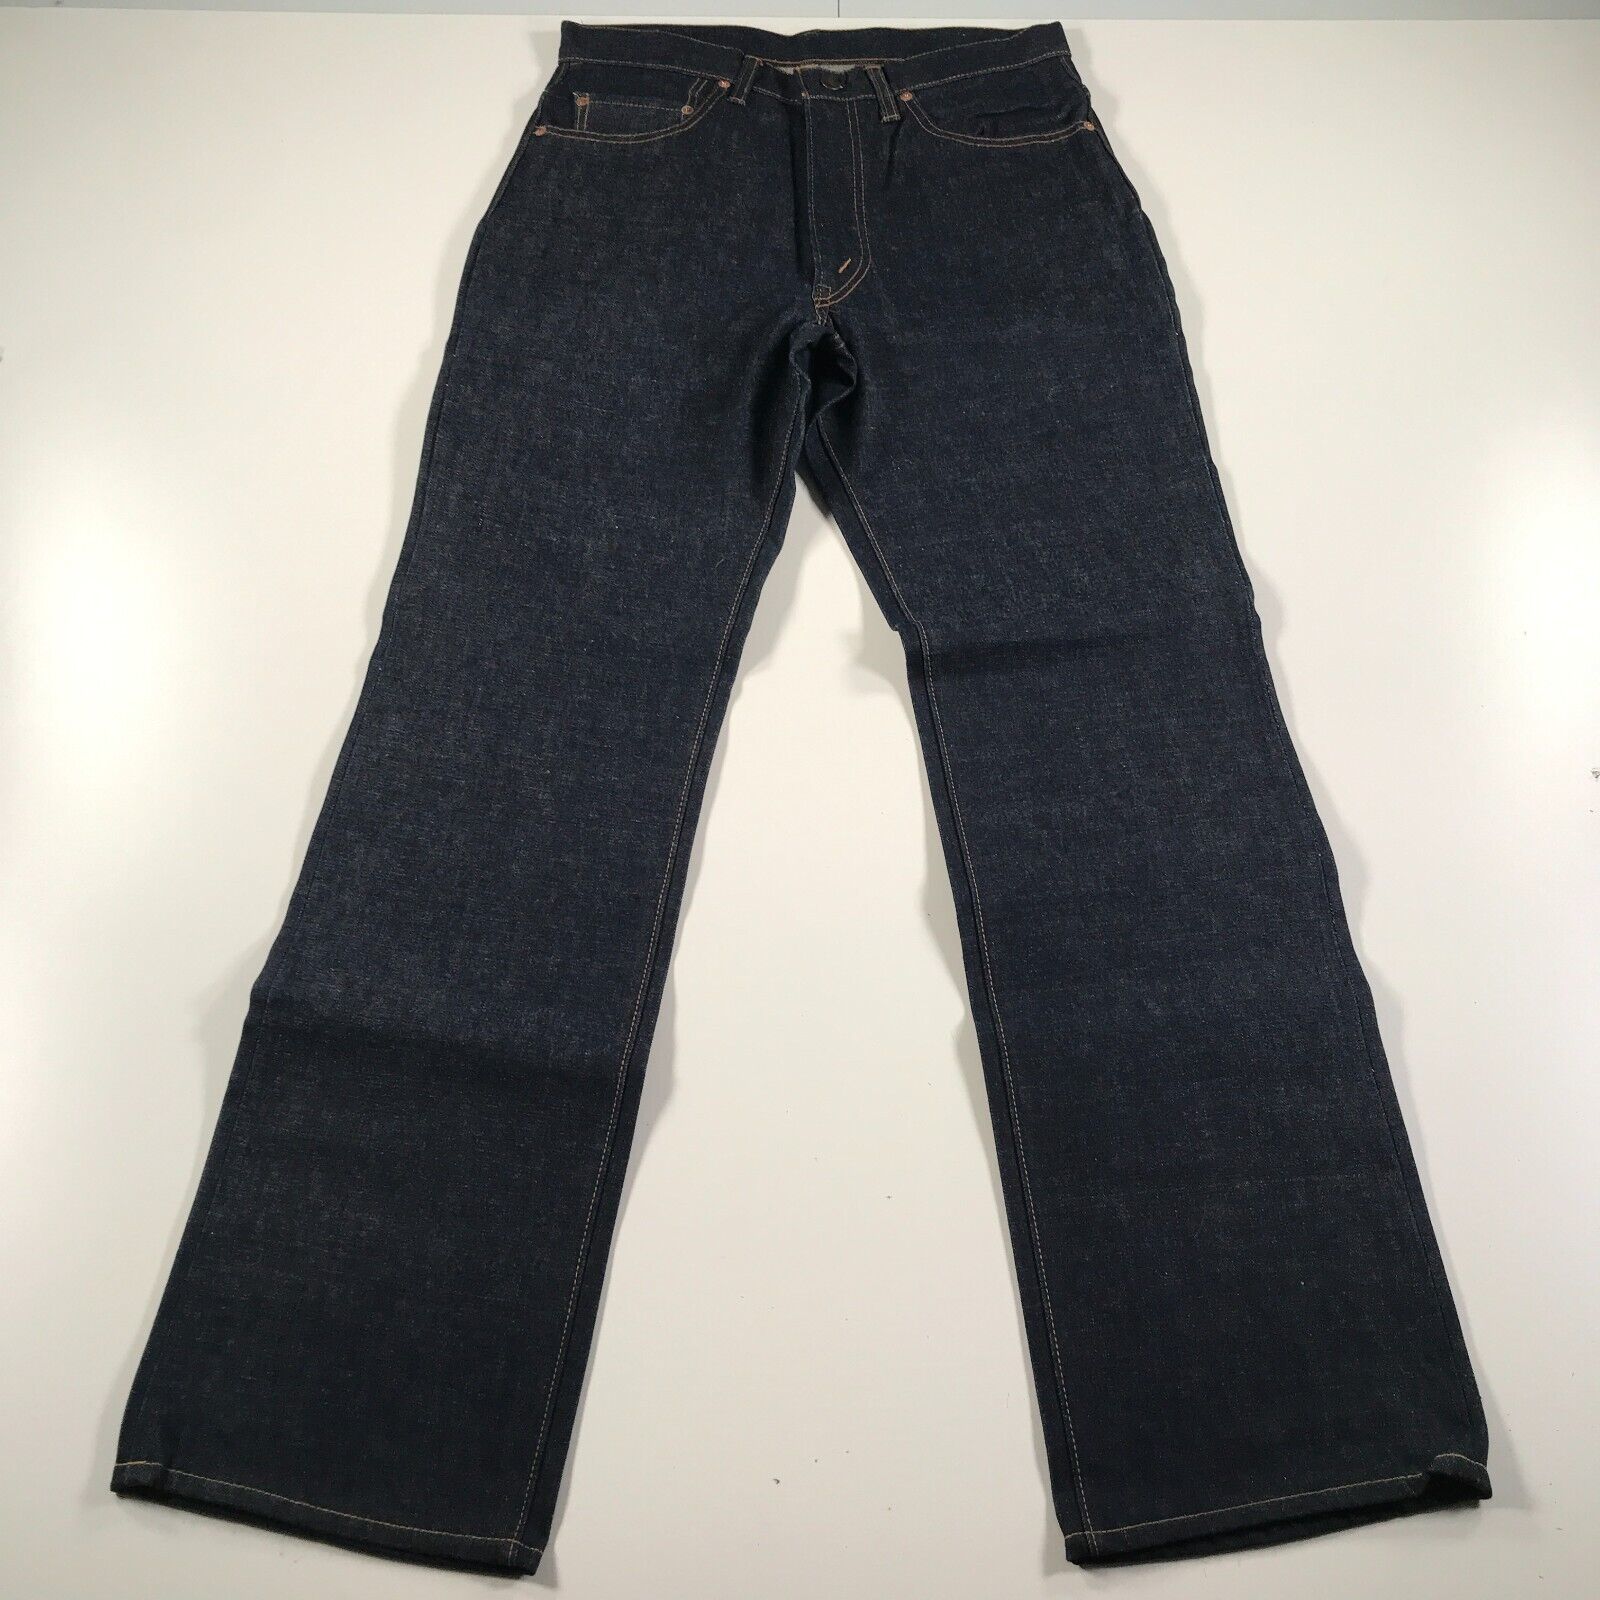 Primary image for New Vintage Levi's 517 Jeans Mens 34x34 Dark Blue Denim 1969 Big E Deadstock NOS